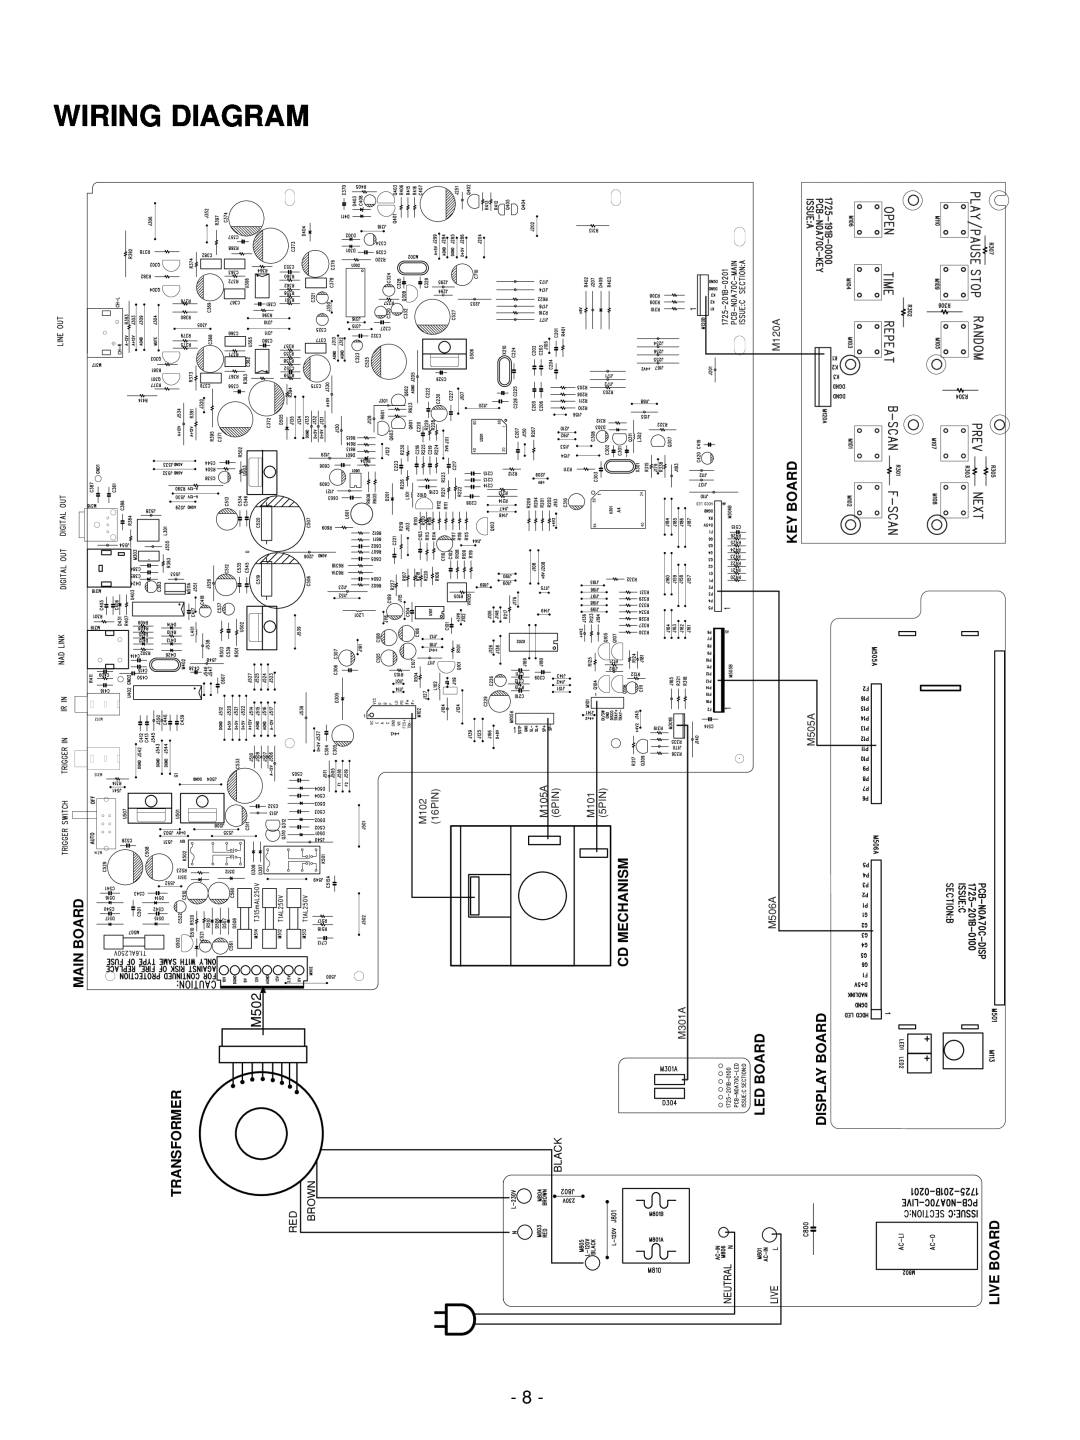 NAD C 542 Wiring Diagram, Transformer, Main Board, Cd Mechanism, Led Board, Display Board, Key Board, Live Board 